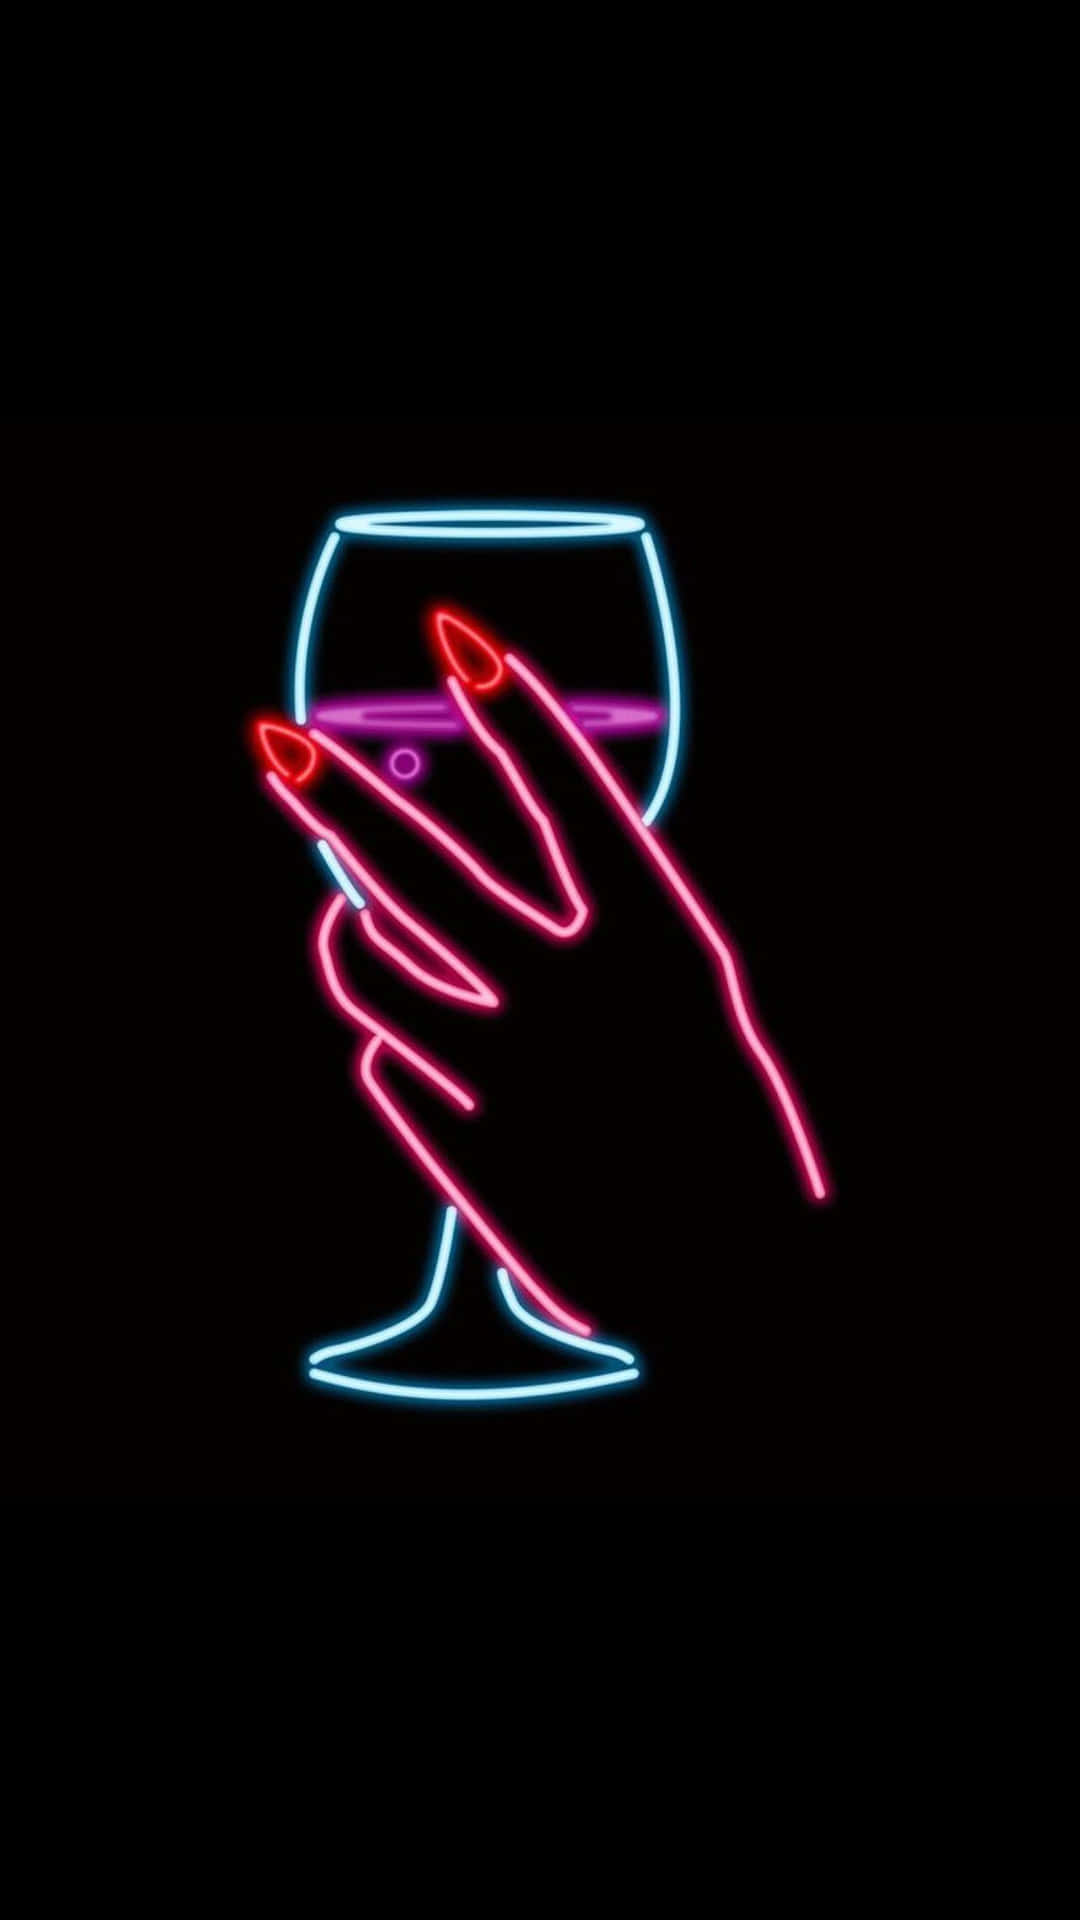 Neon Hand Holding Wine Glass Wallpaper